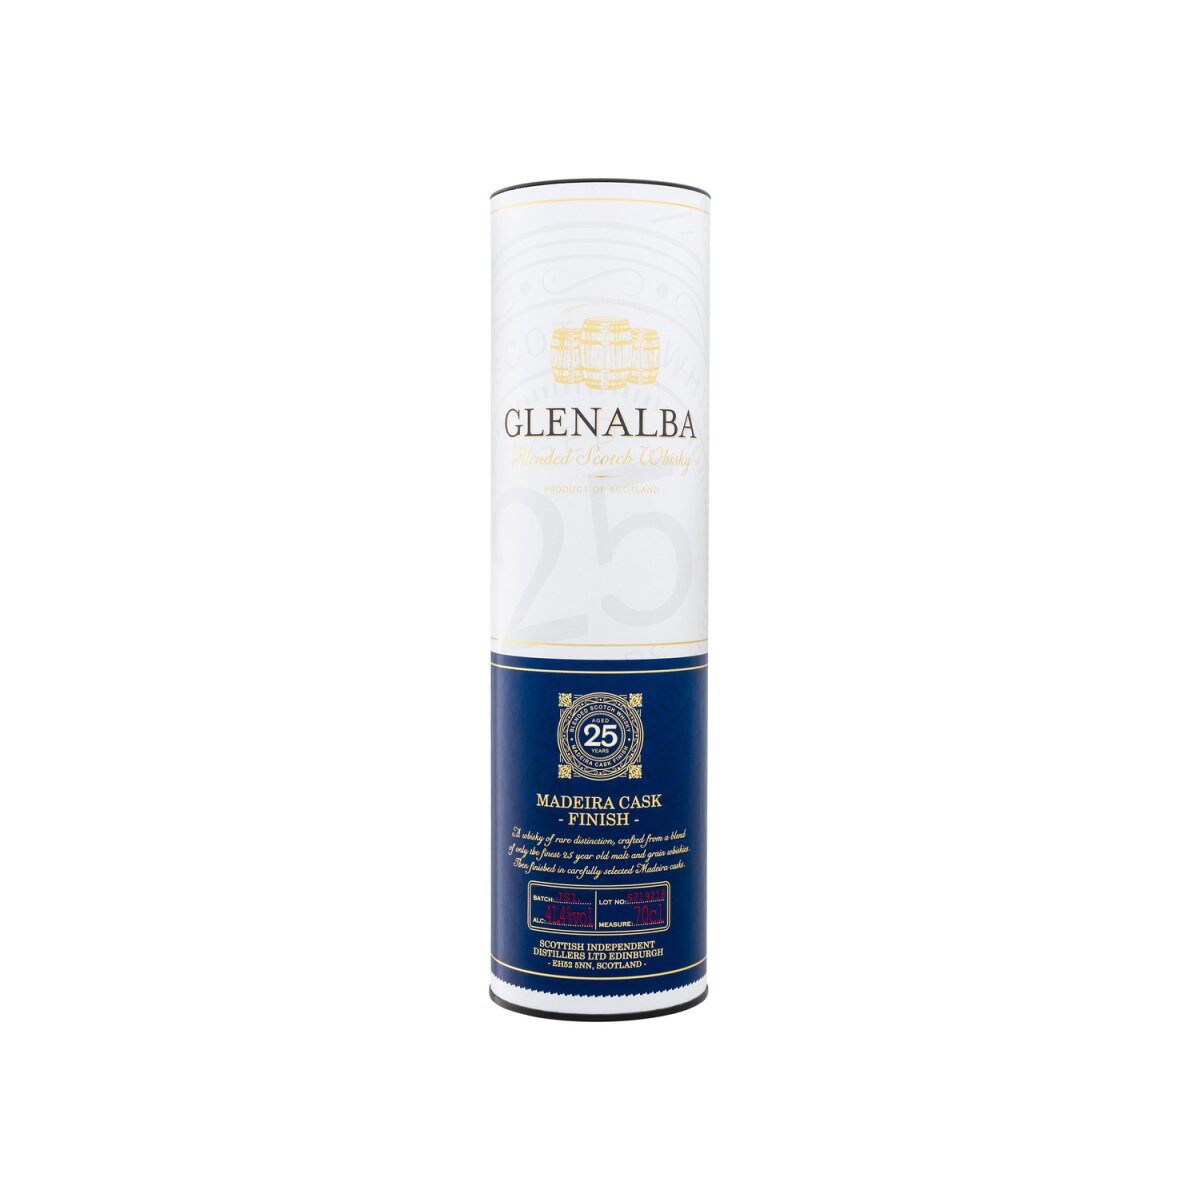 Scotch Vol, 40,99 Blended mit Whisky Glenalba 41,4% Madeira Cask 25 Finish € Geschenkbox Jahre